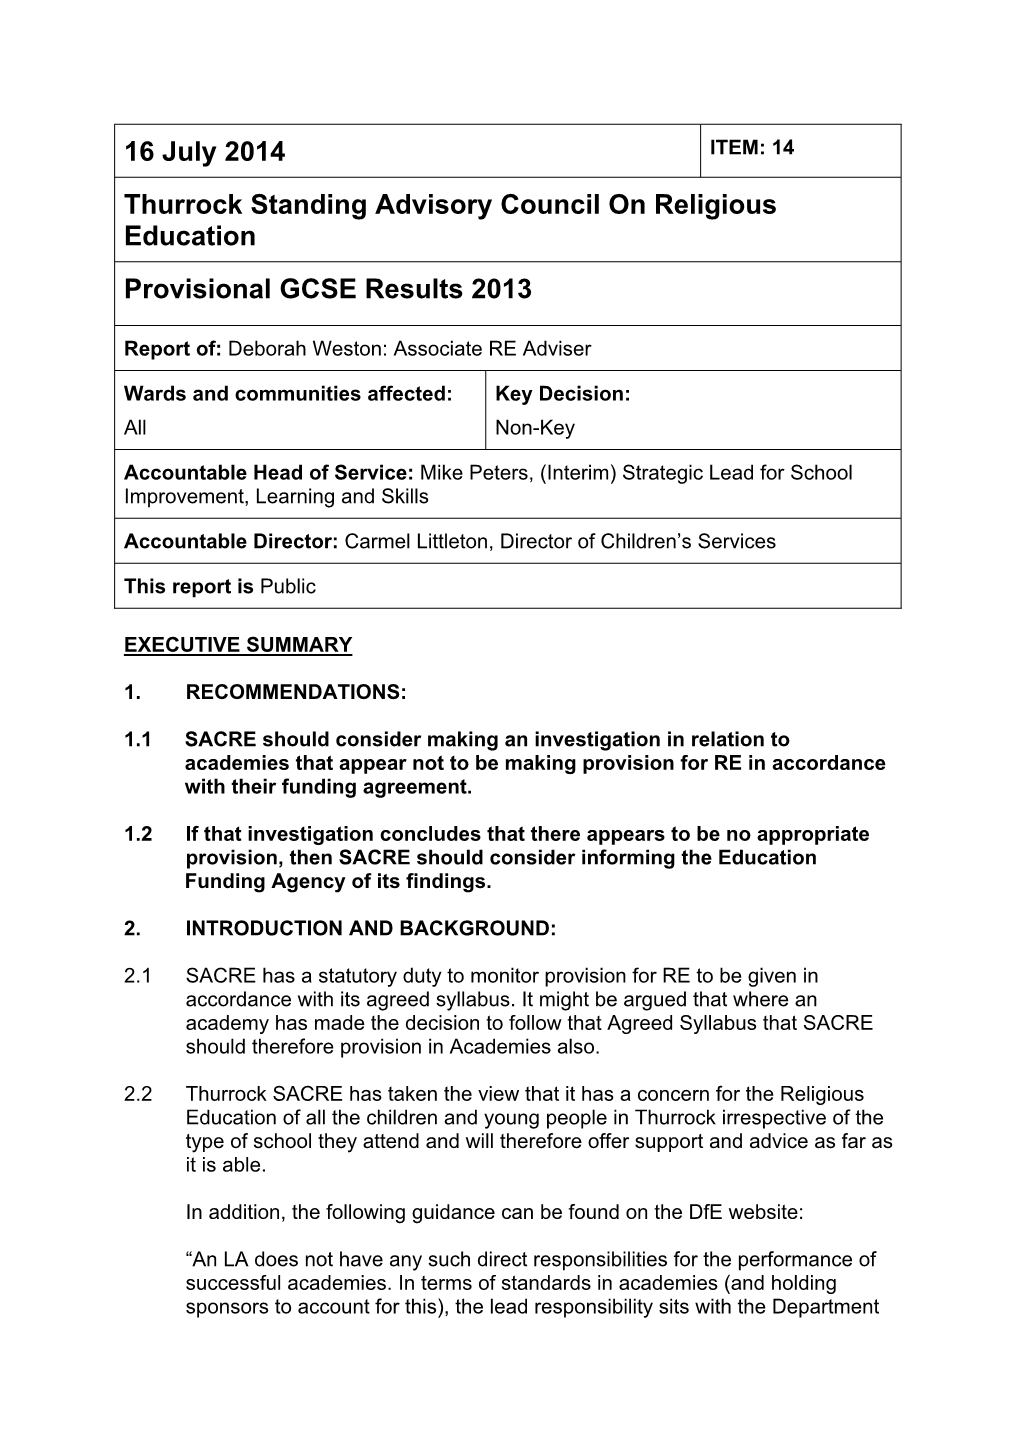 Provisional GCSE Results 2013 PDF 81 KB